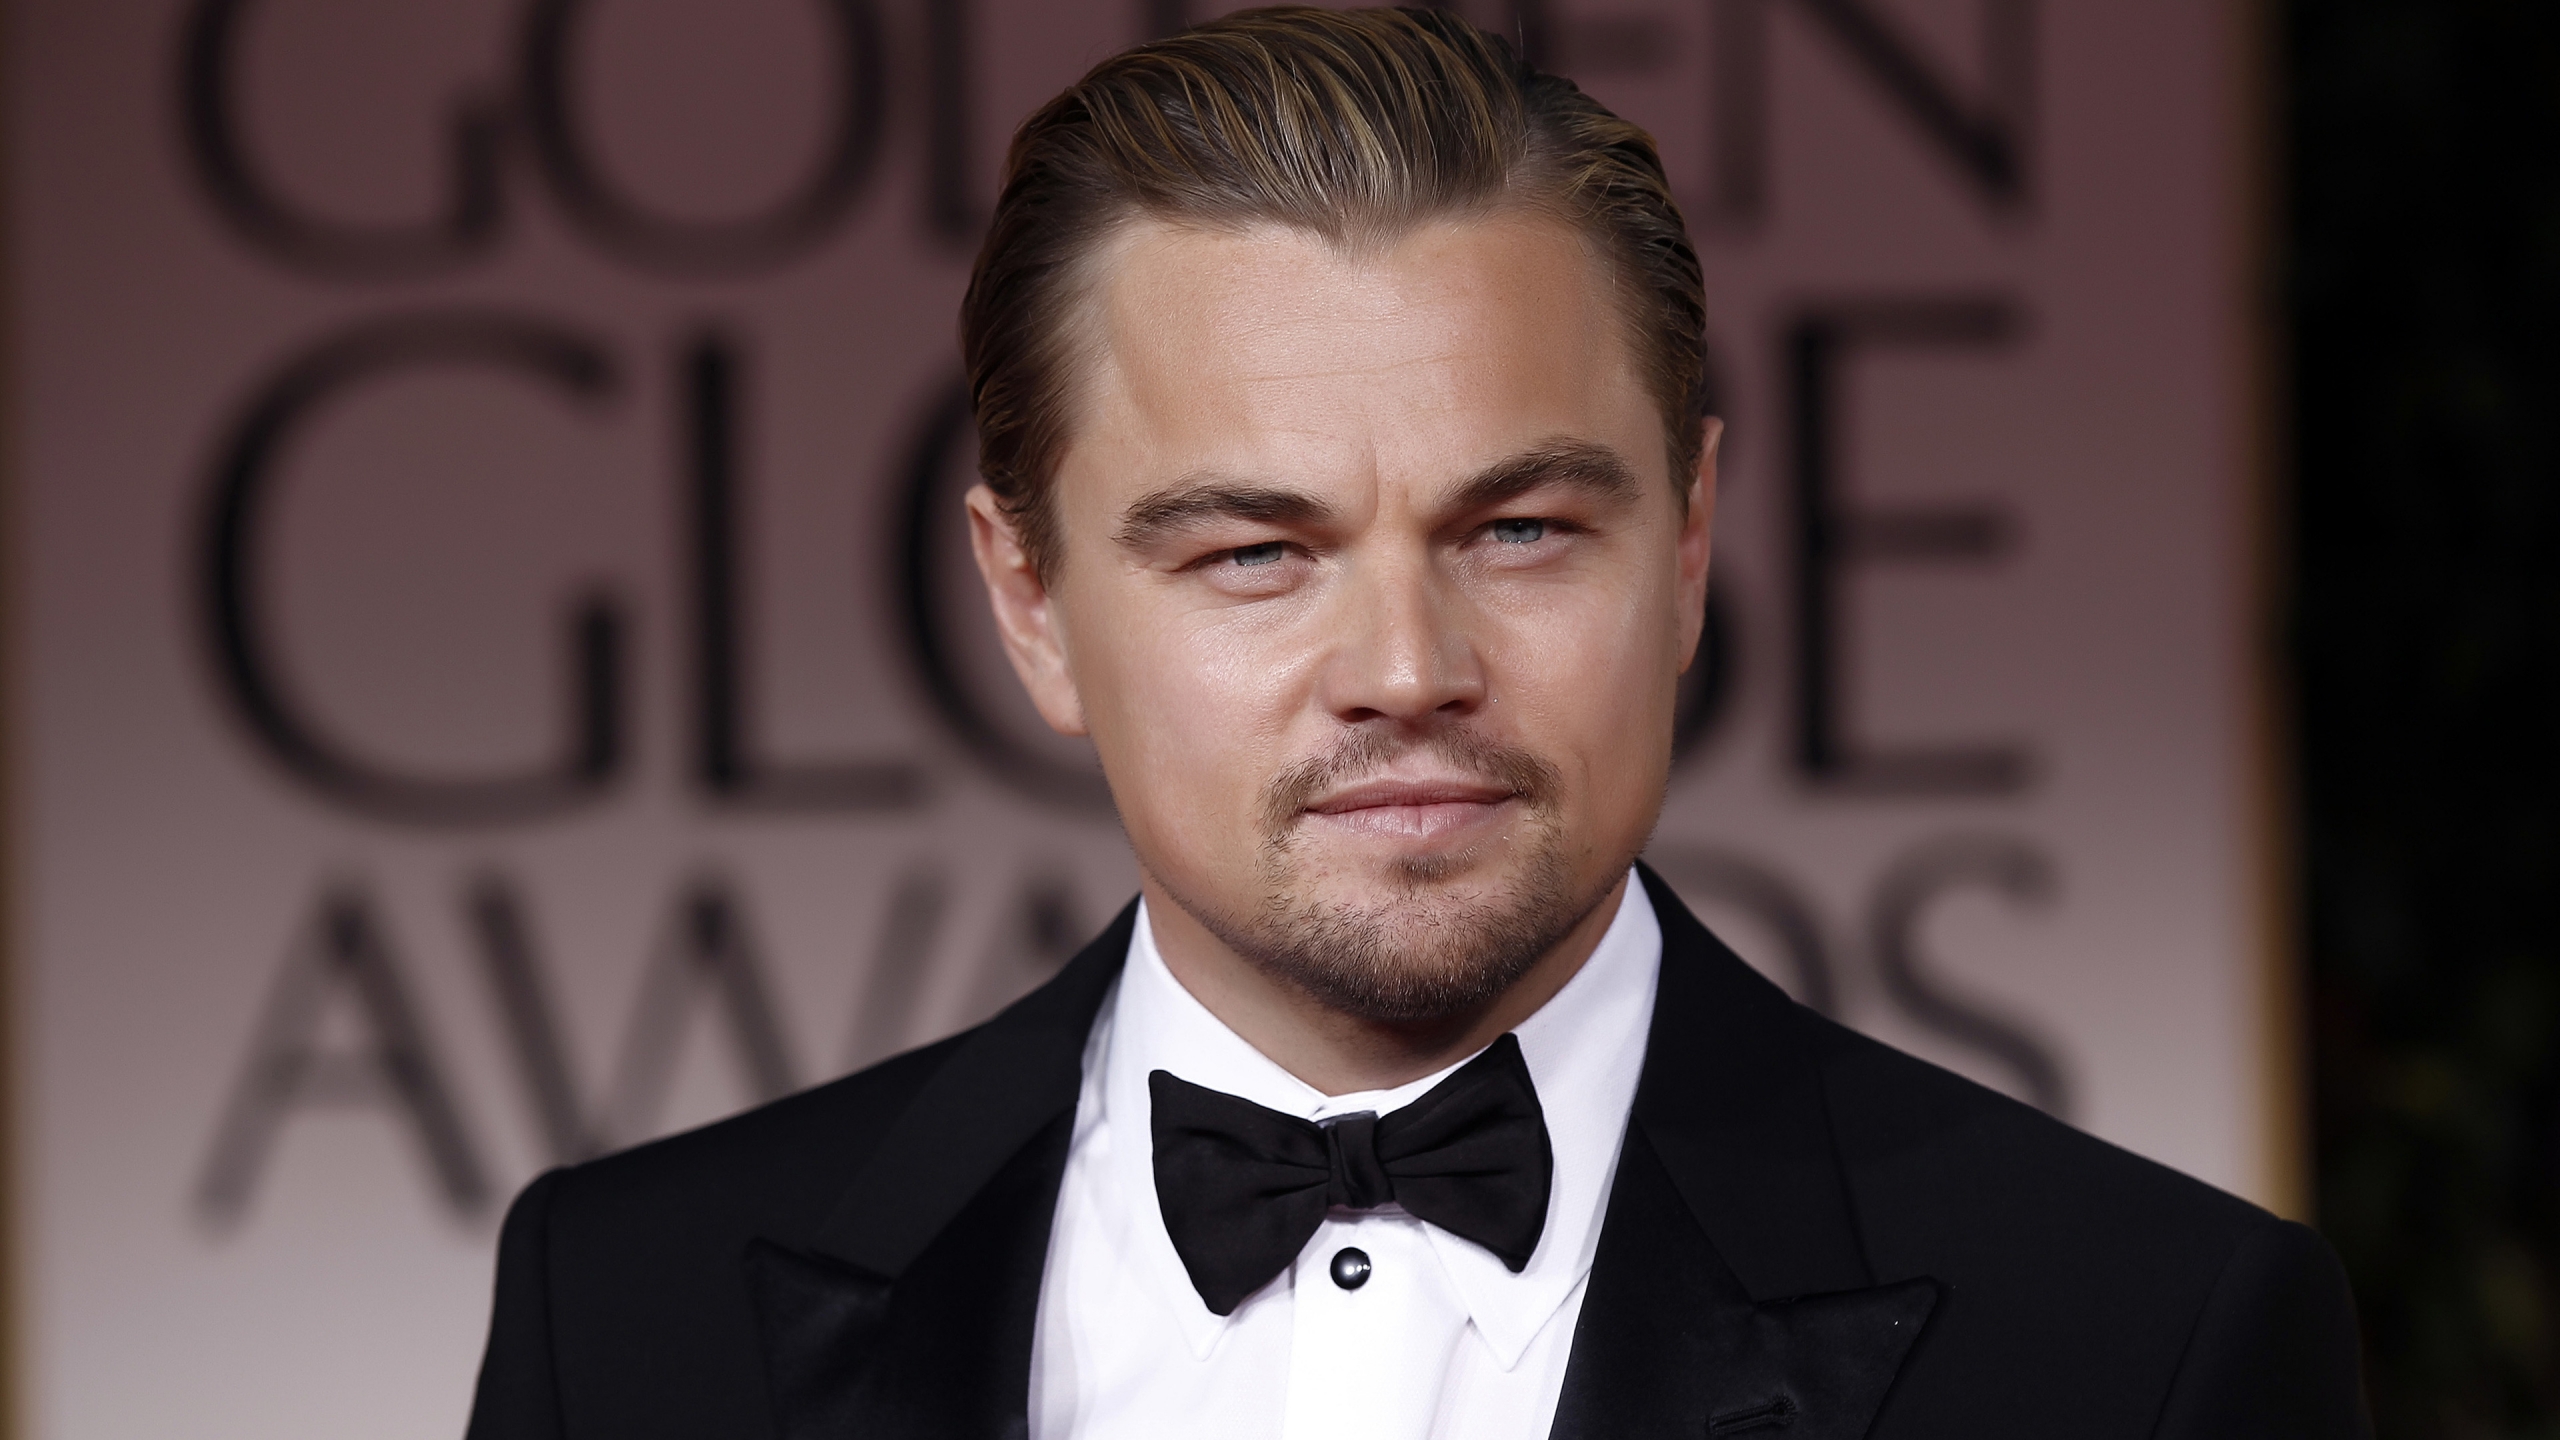 Leonardo DiCaprio in Tuxedo for 2560x1440 HDTV resolution